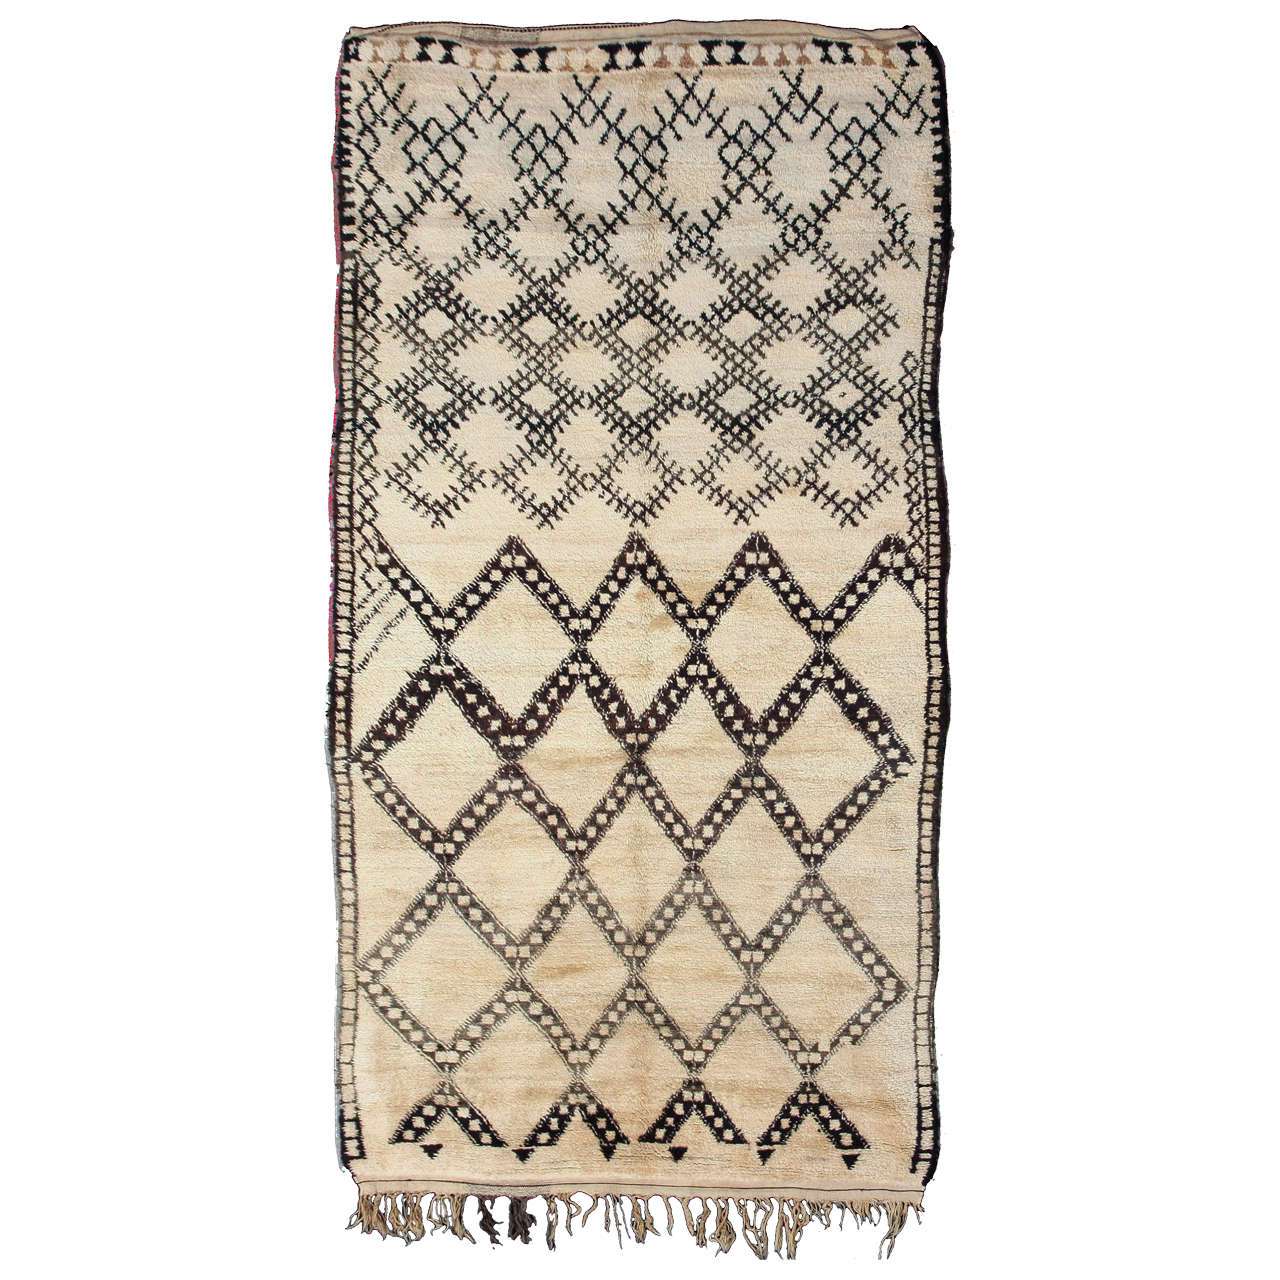 Rare and Unusual Beni Ouarain Berber Carpet